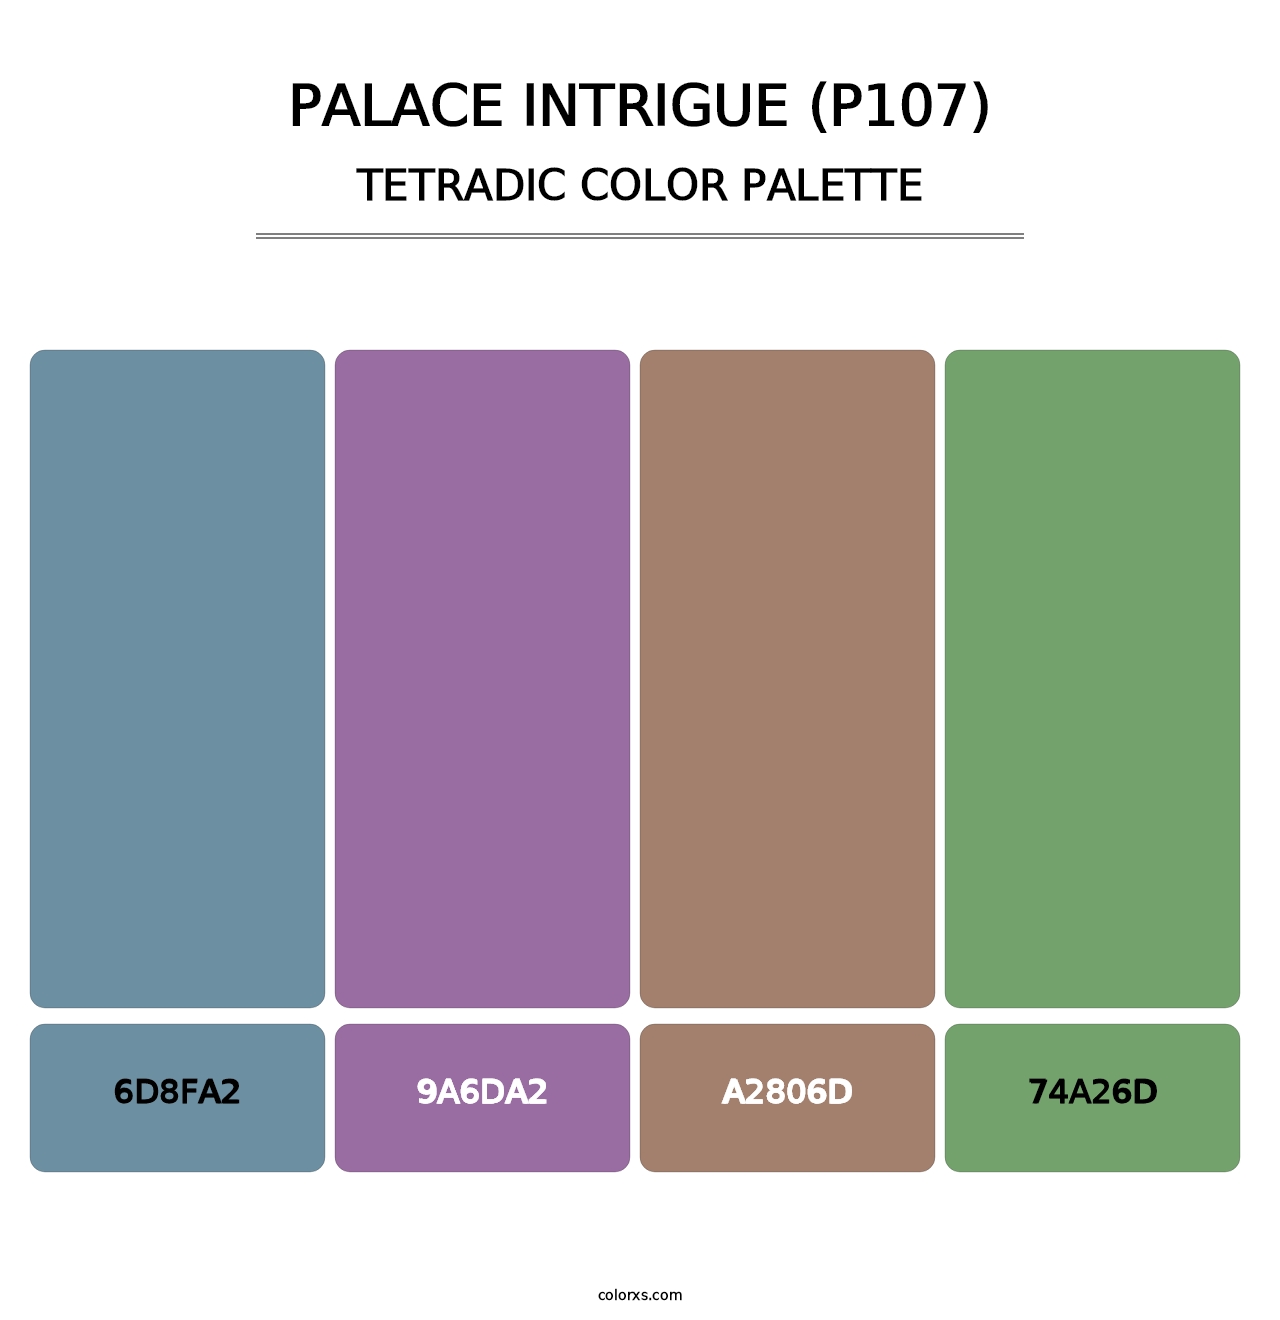 Palace Intrigue (P107) - Tetradic Color Palette